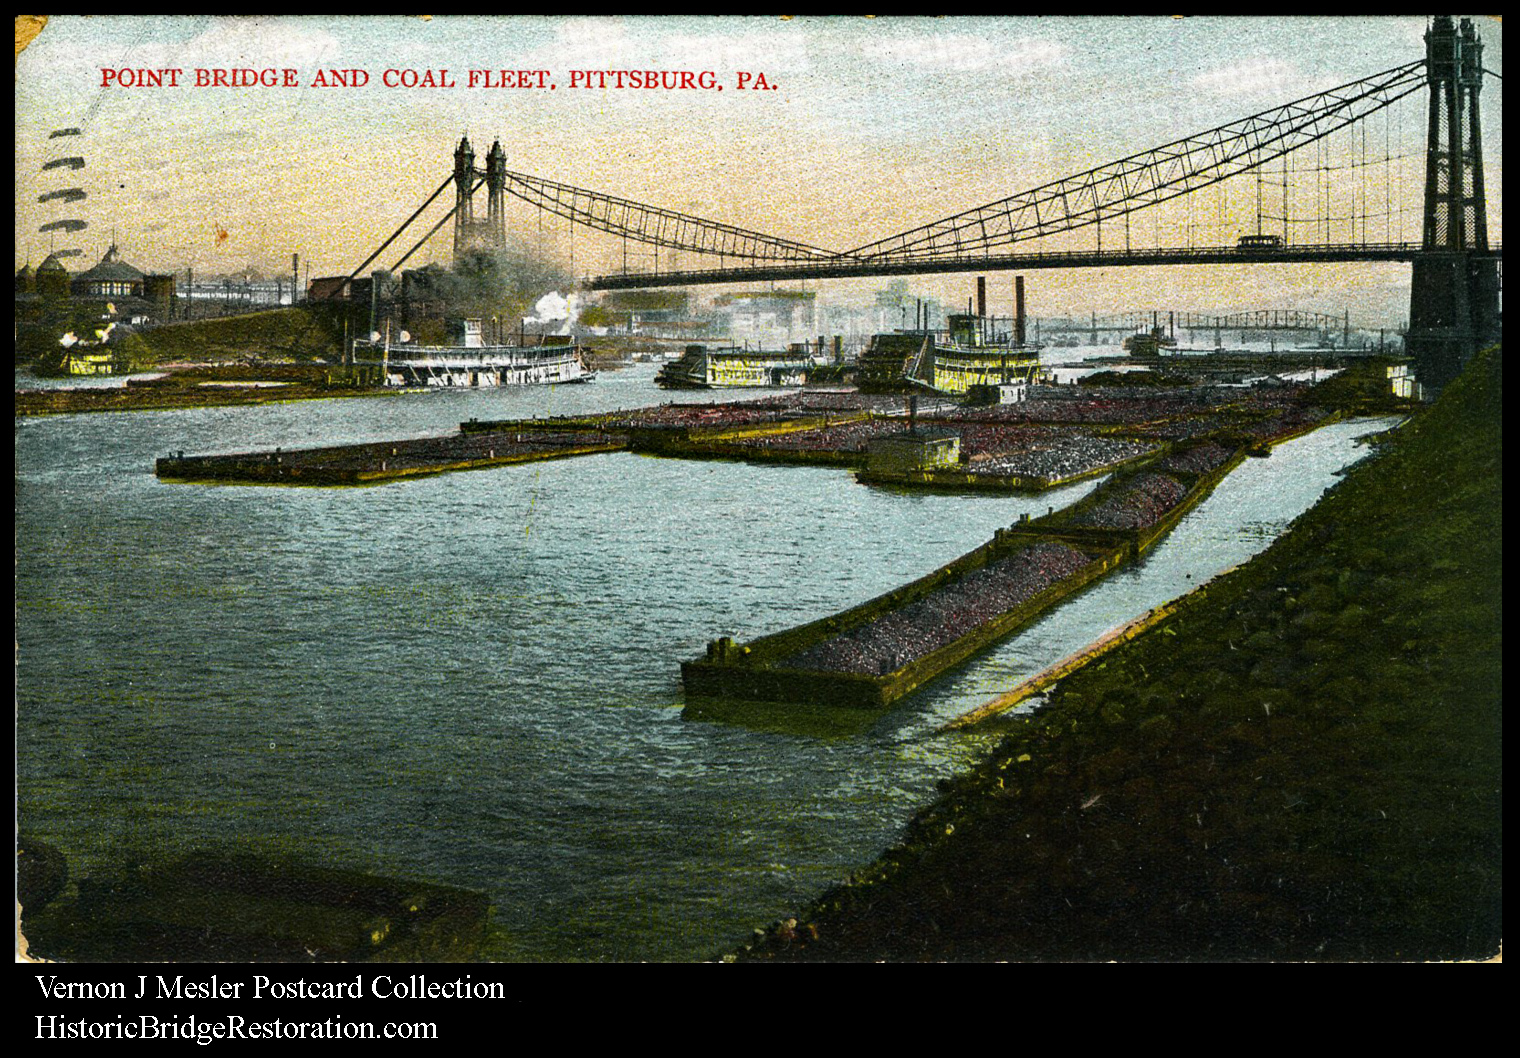 Point Bridge and Coal Fleet, Pittsburg, PA.